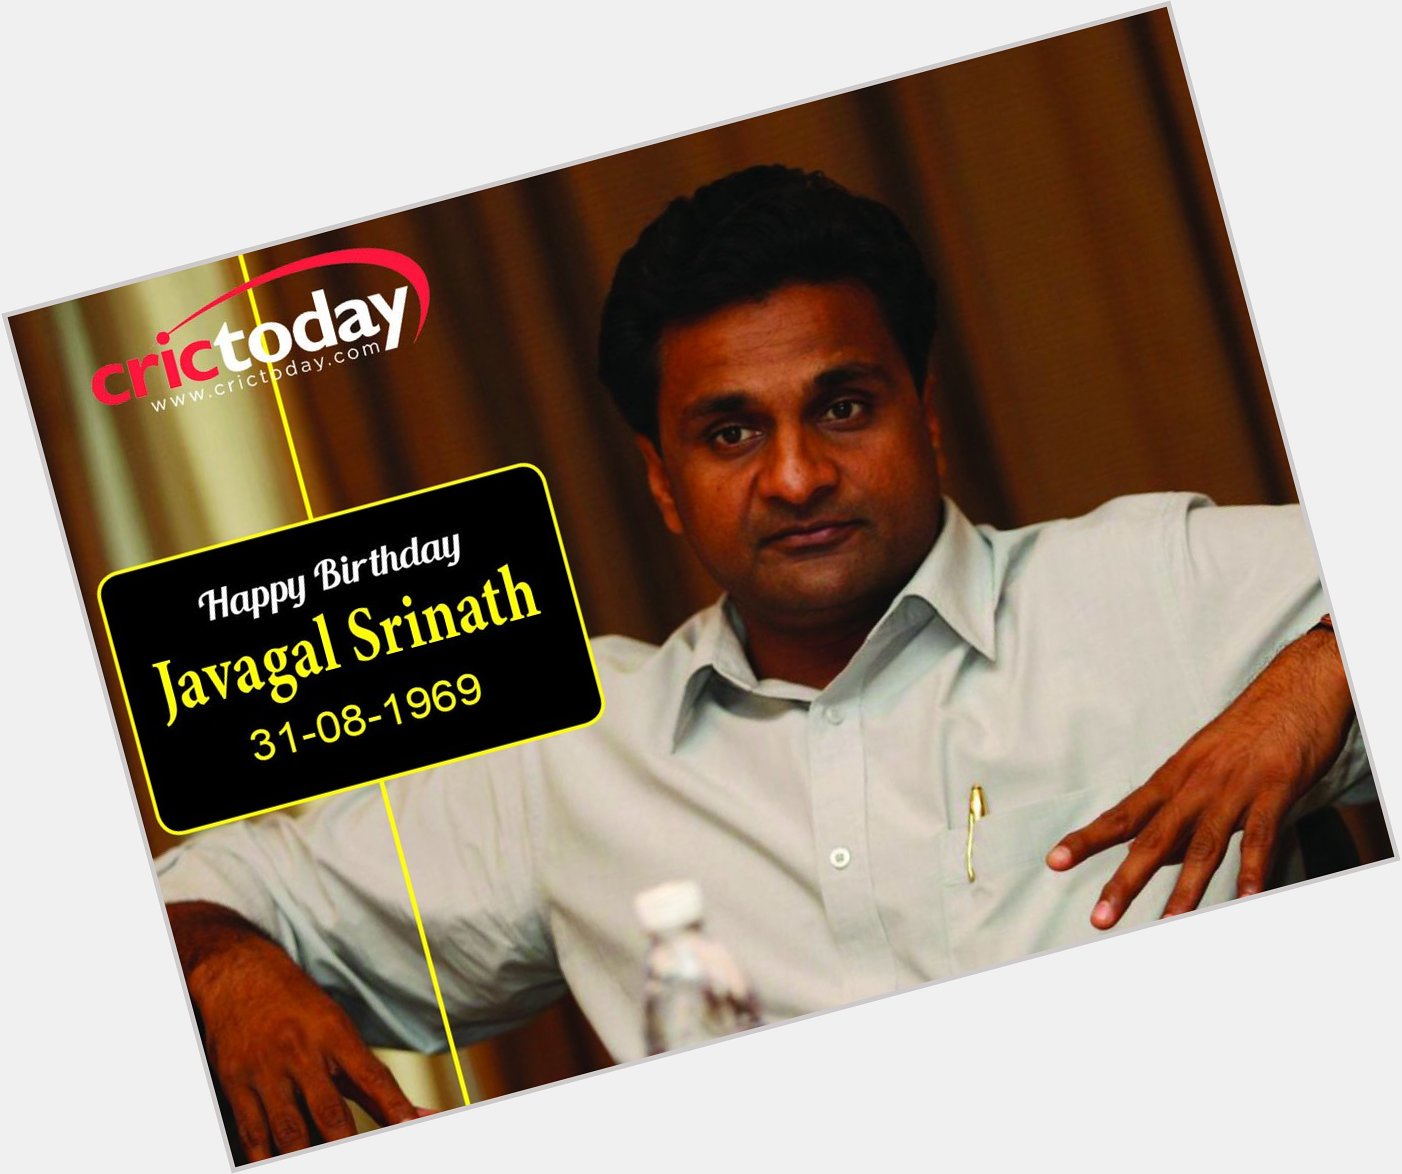  Happy Birthday Javagal Srinath 